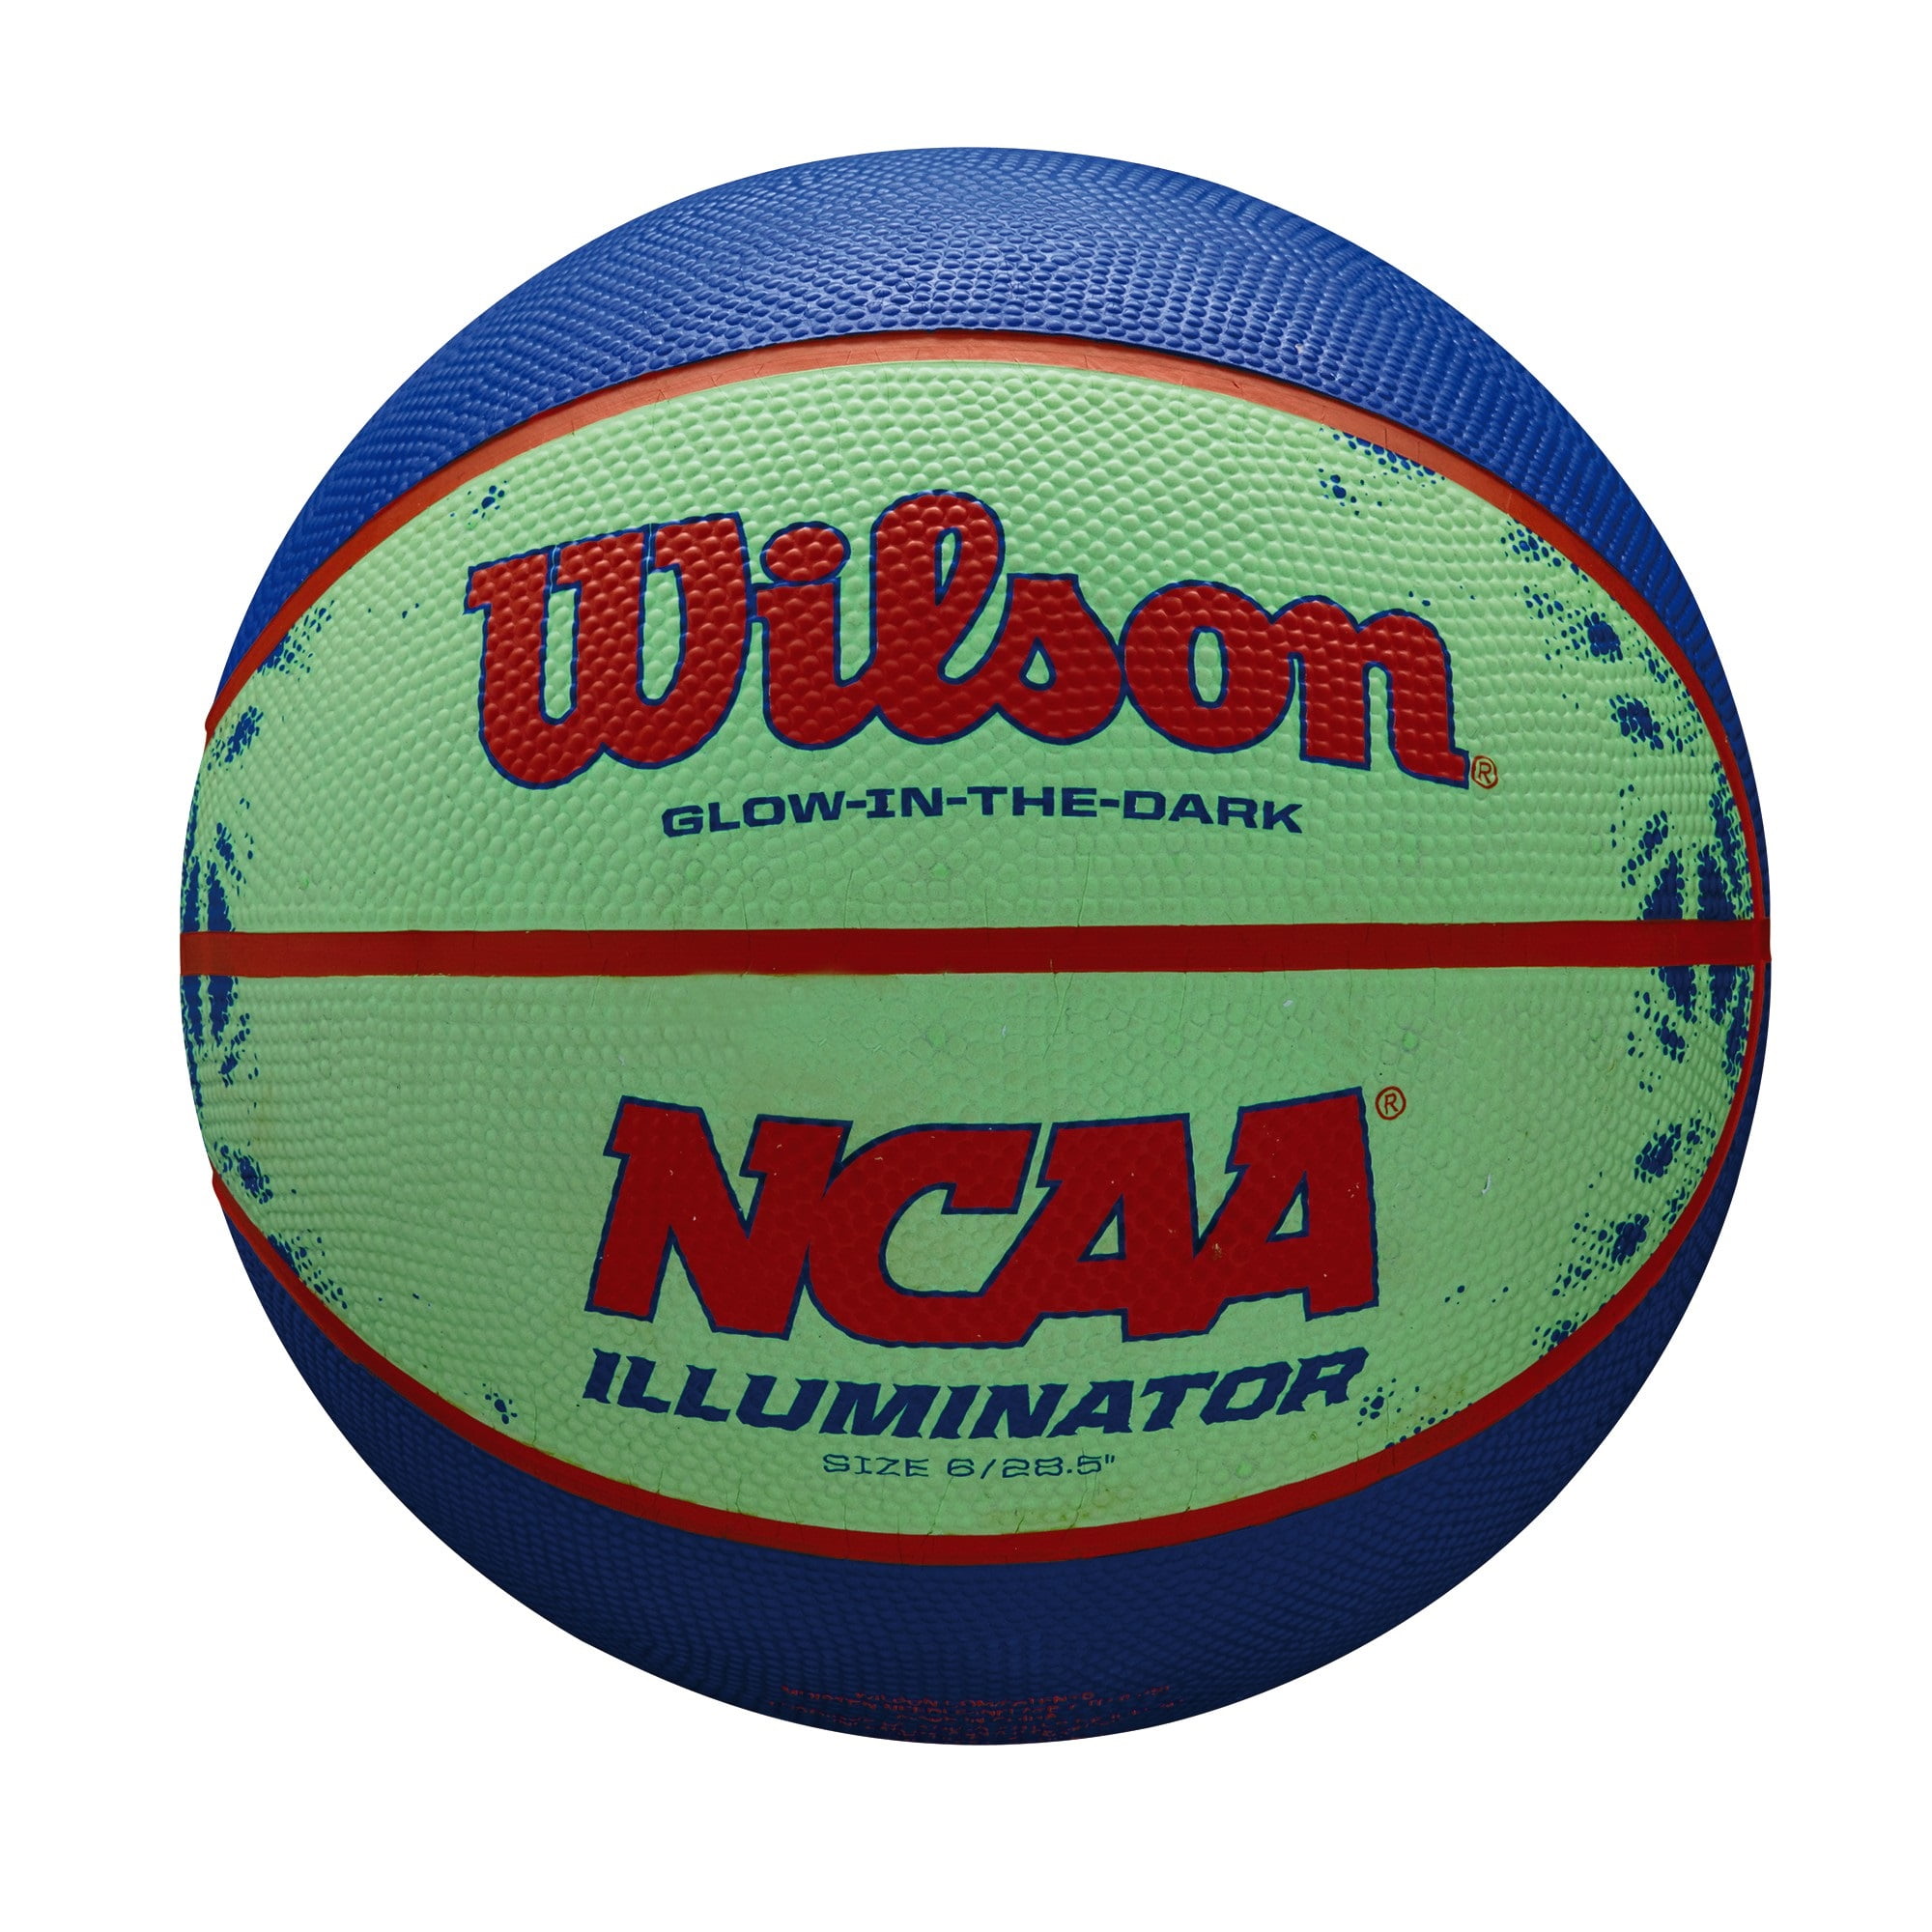 WILSON NCAA INTERMEDIATE BASKETBALL 28.5 FREE SHIPPING 